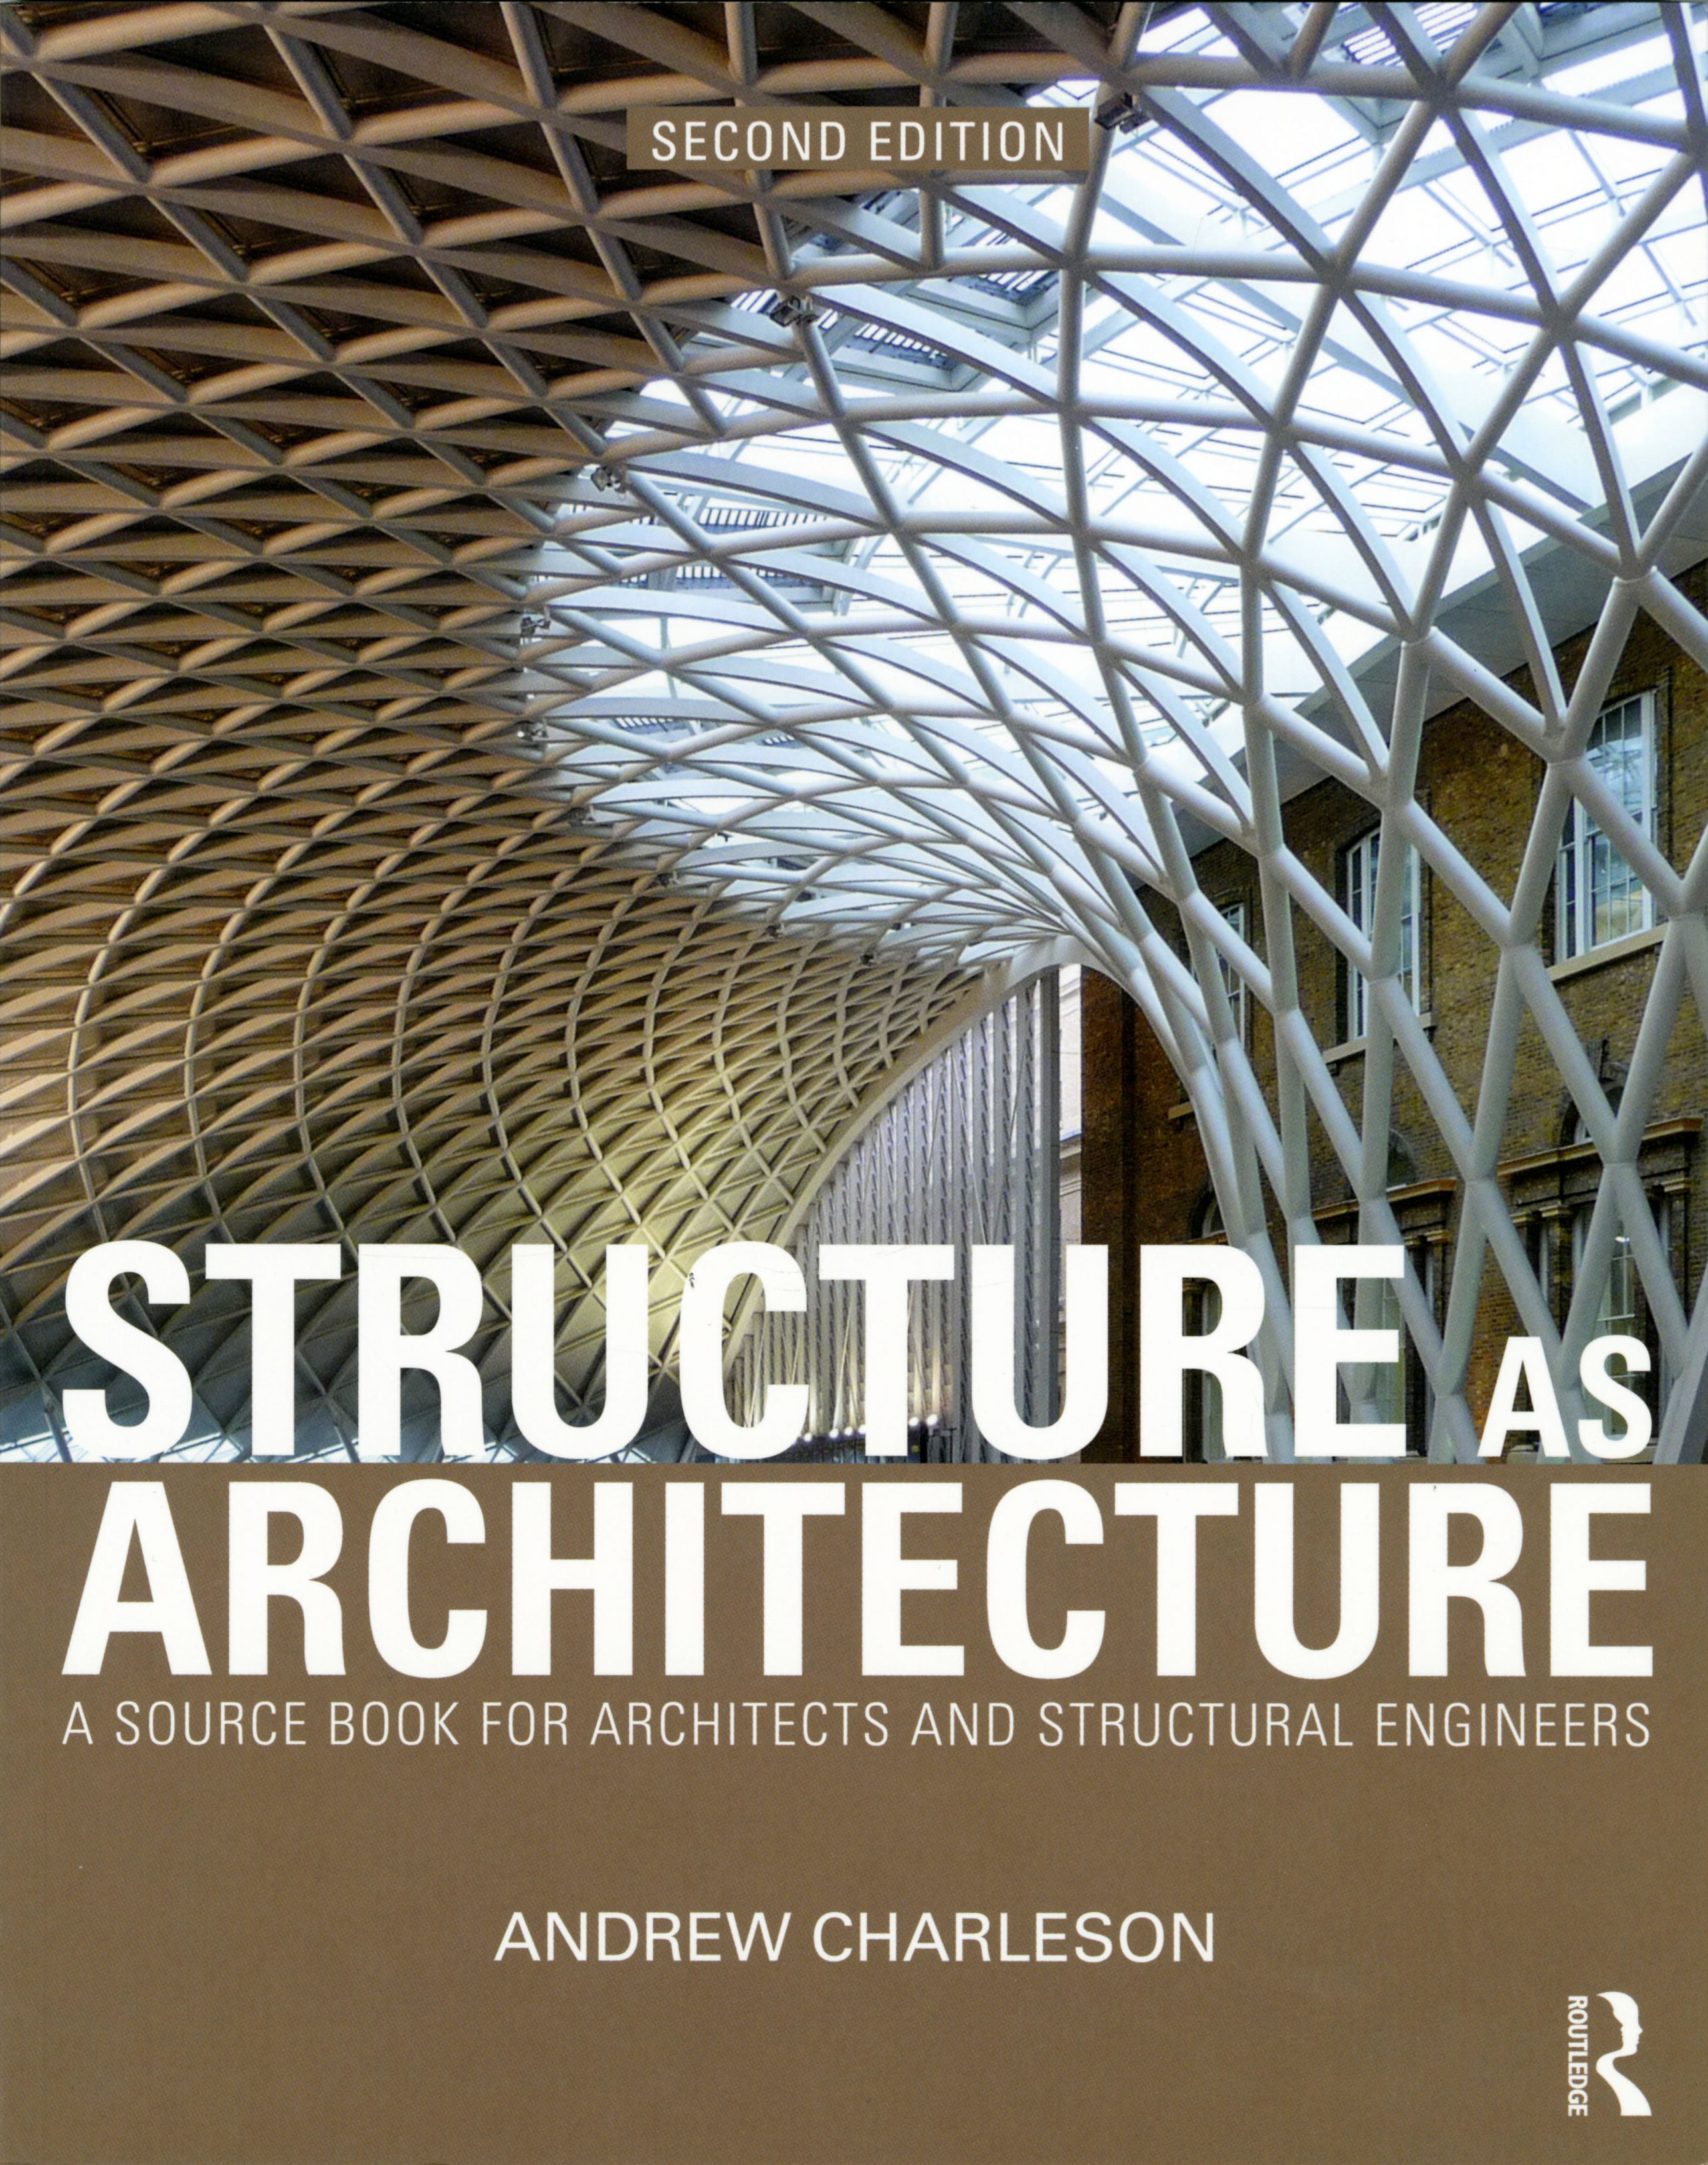 Architecture book. Структура в архитектуре. Теория архитектуры. Современная архитектура книга. Архитектура источник книга.